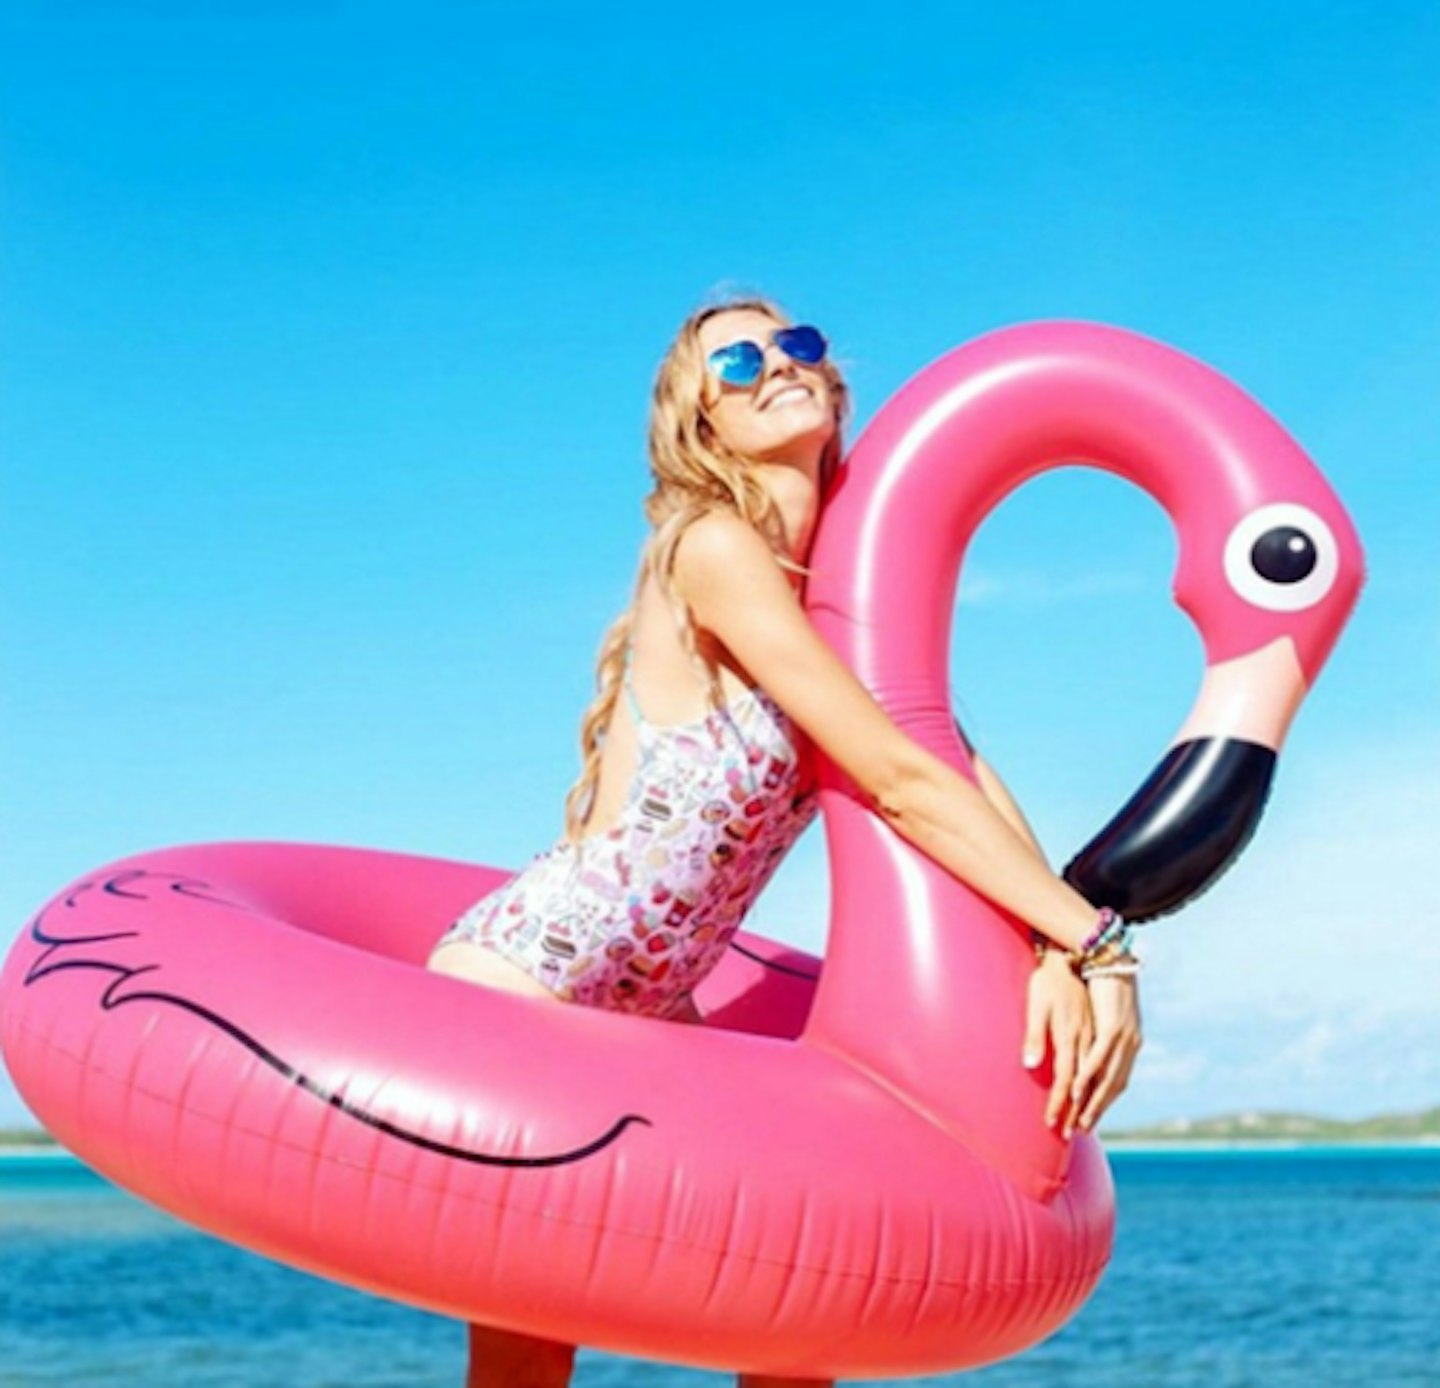 love-island-party-flamingo-pool-inflatable